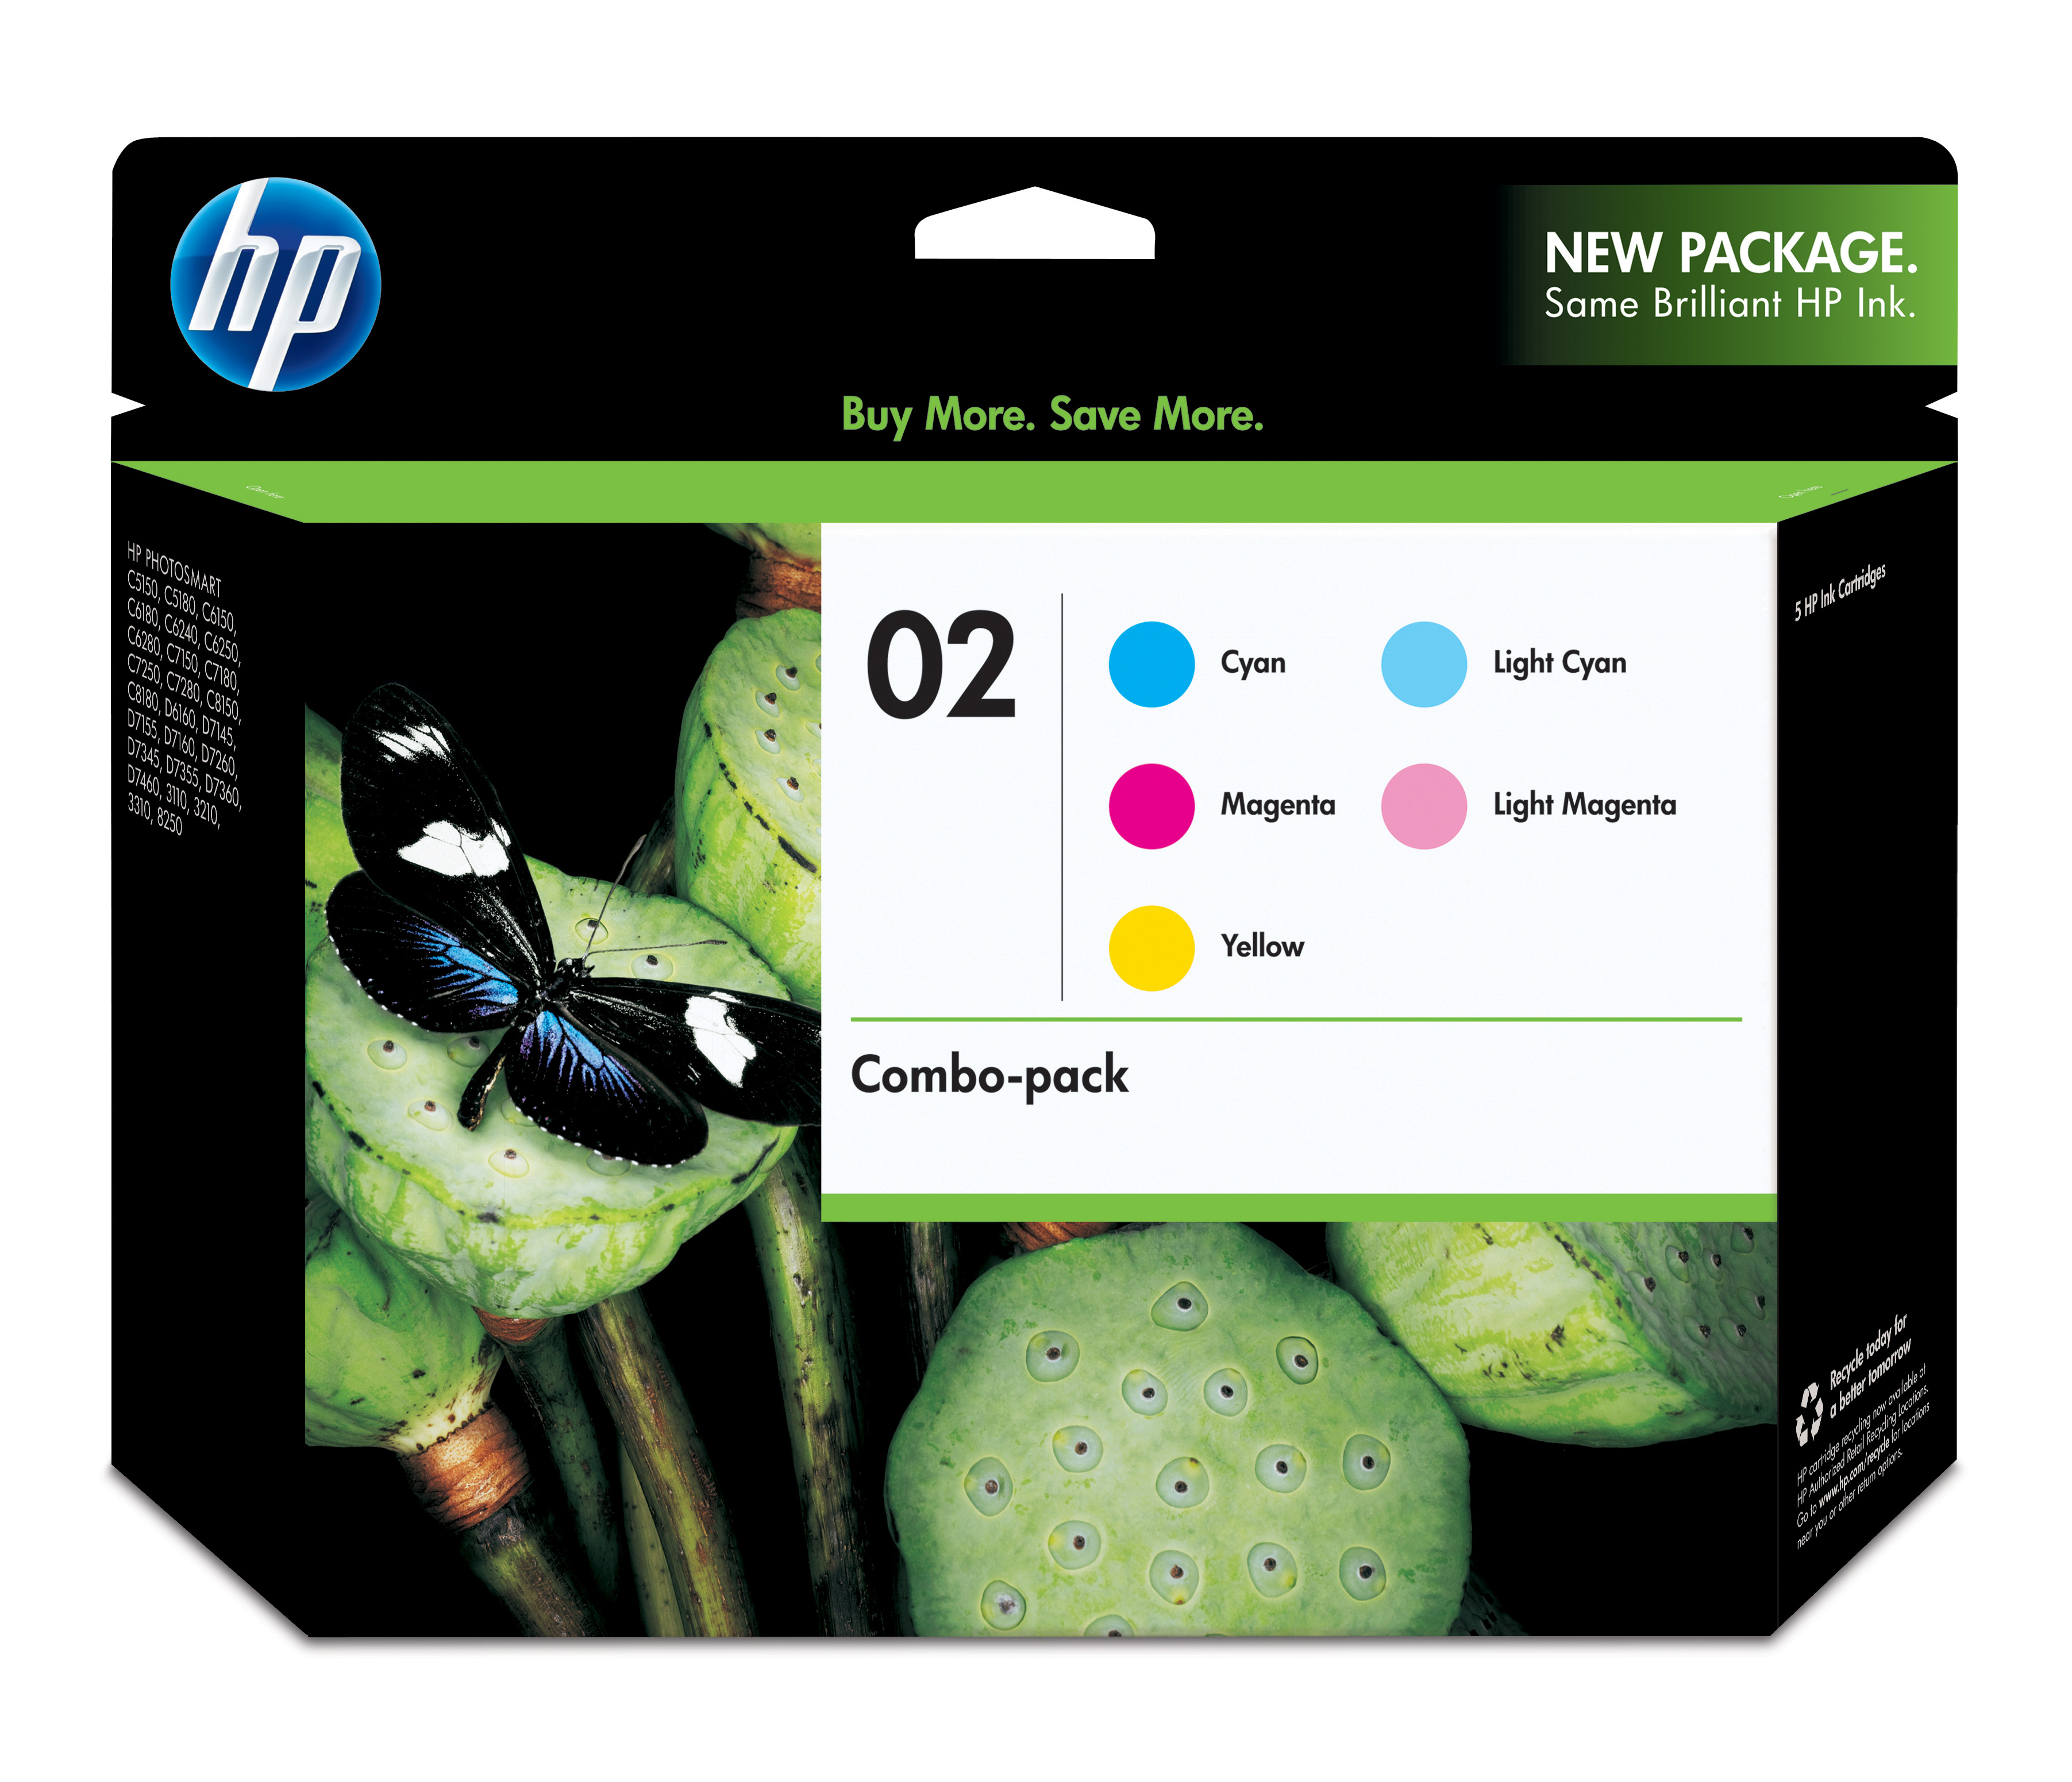 HP 02 Combo-pack Ink Cartridges Genuine HP Inkjet